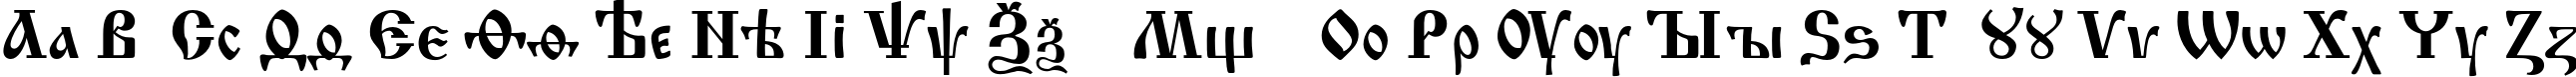 Пример написания английского алфавита шрифтом IzhitsaC